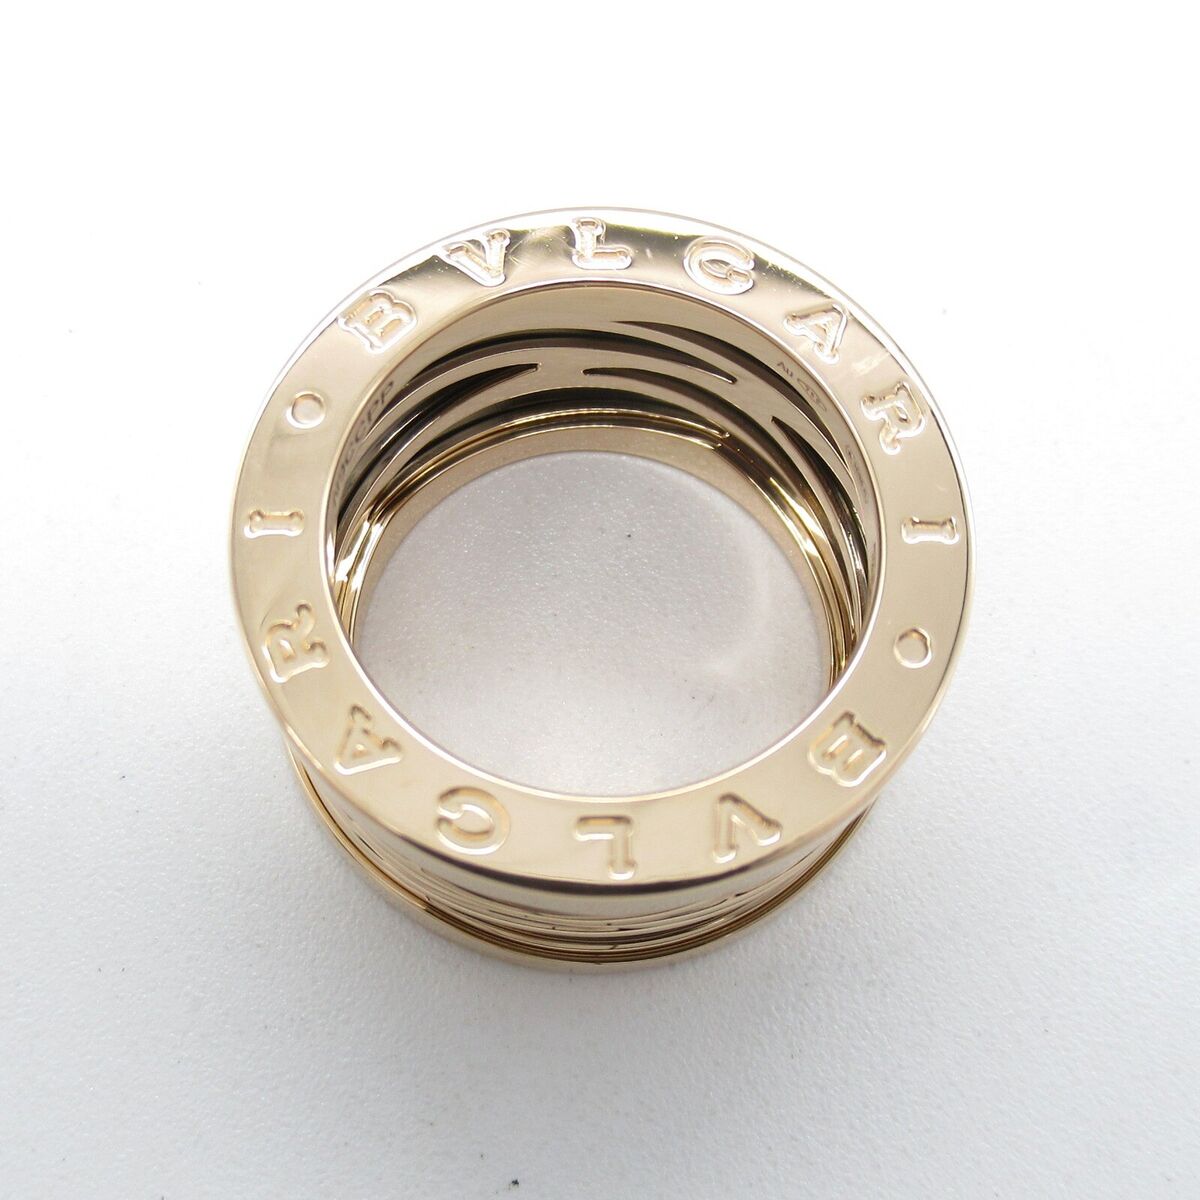 BVLGARI B-zero1 Design Legend 4-Band Ring #53 #6.5 US size ceramic